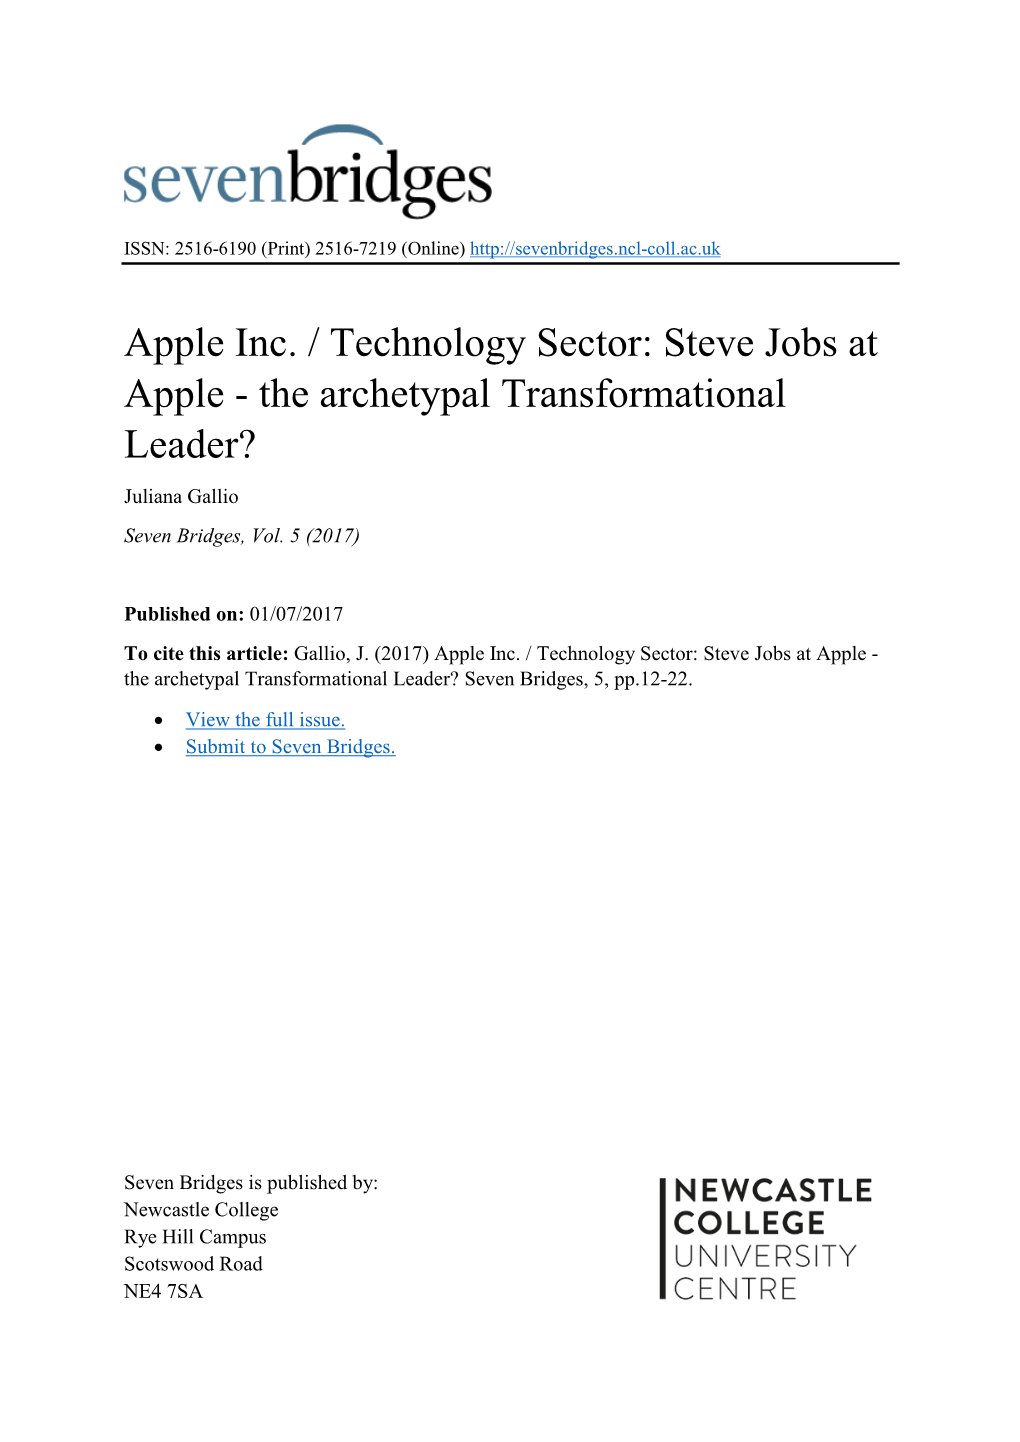 Apple Inc. / Technology Sector: Steve Jobs at Apple - the Archetypal Transformational Leader? Juliana Gallio Seven Bridges, Vol